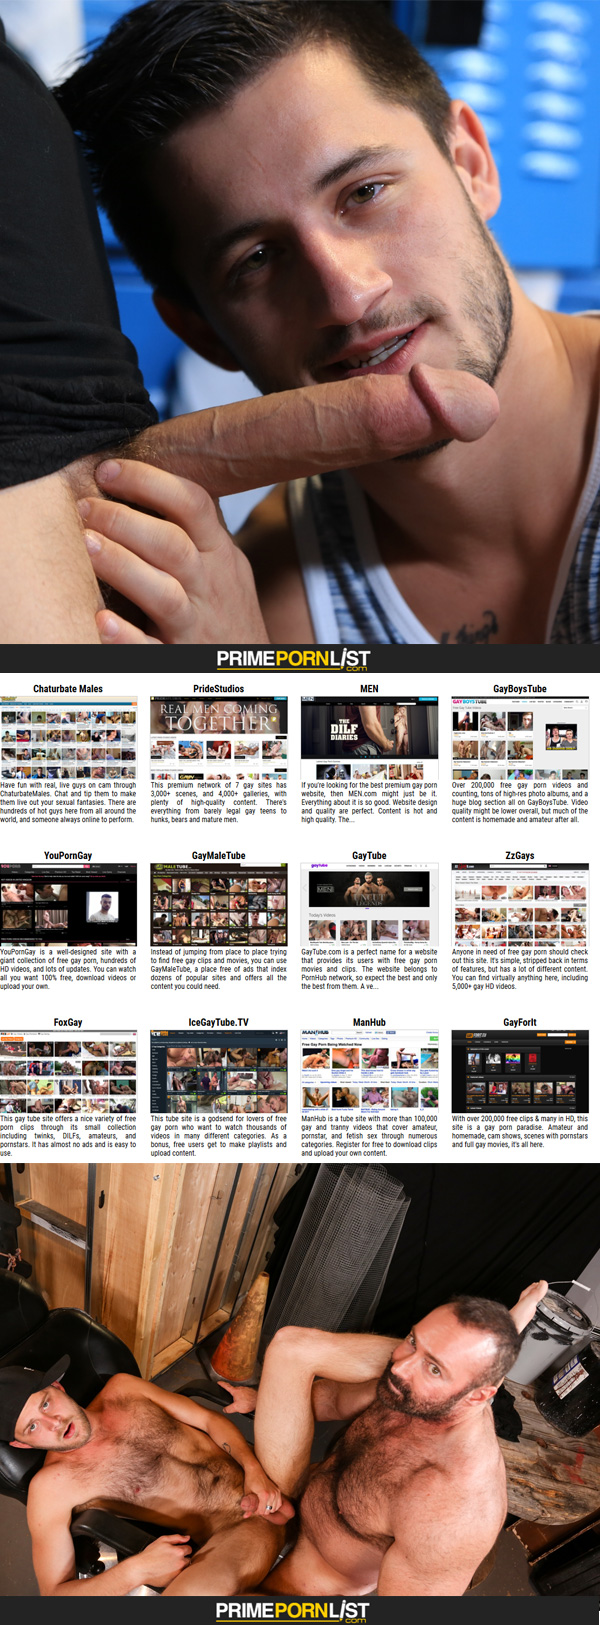 Prime Porn List - Your Favorites Sites Ranked and Categorized image image